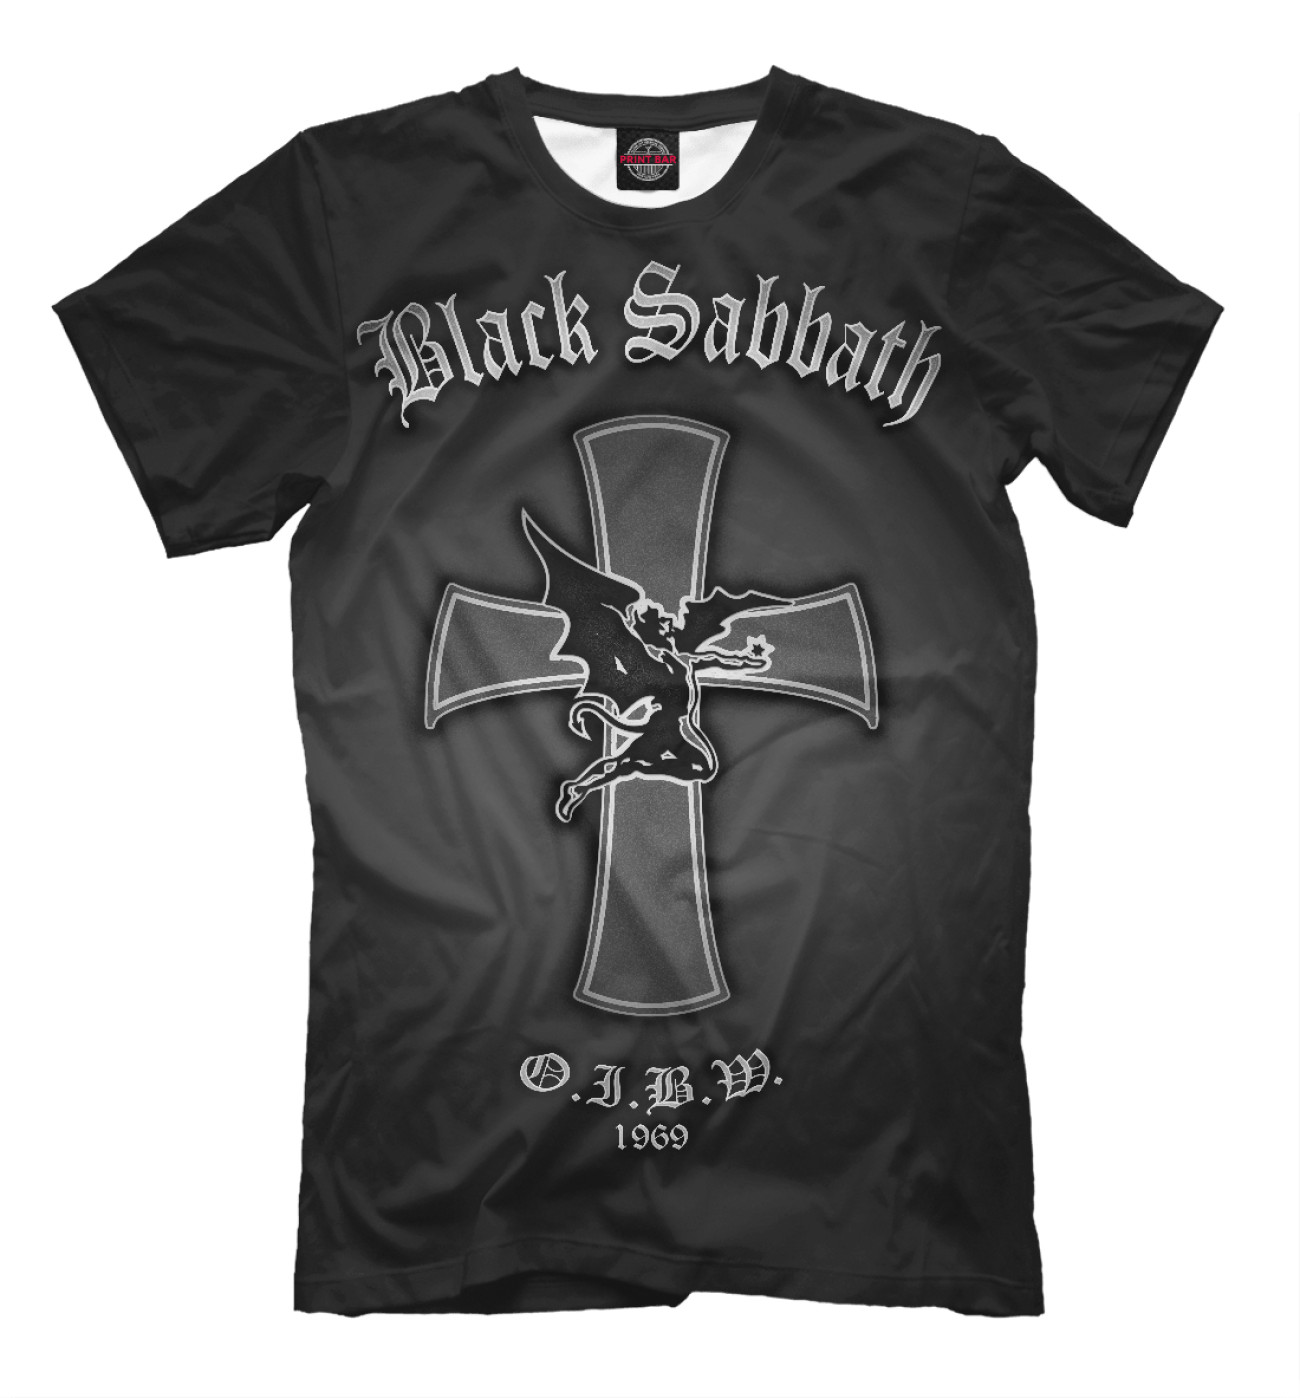 Мужская Футболка Black Sabbath, артикул: BSB-905764-fut-2